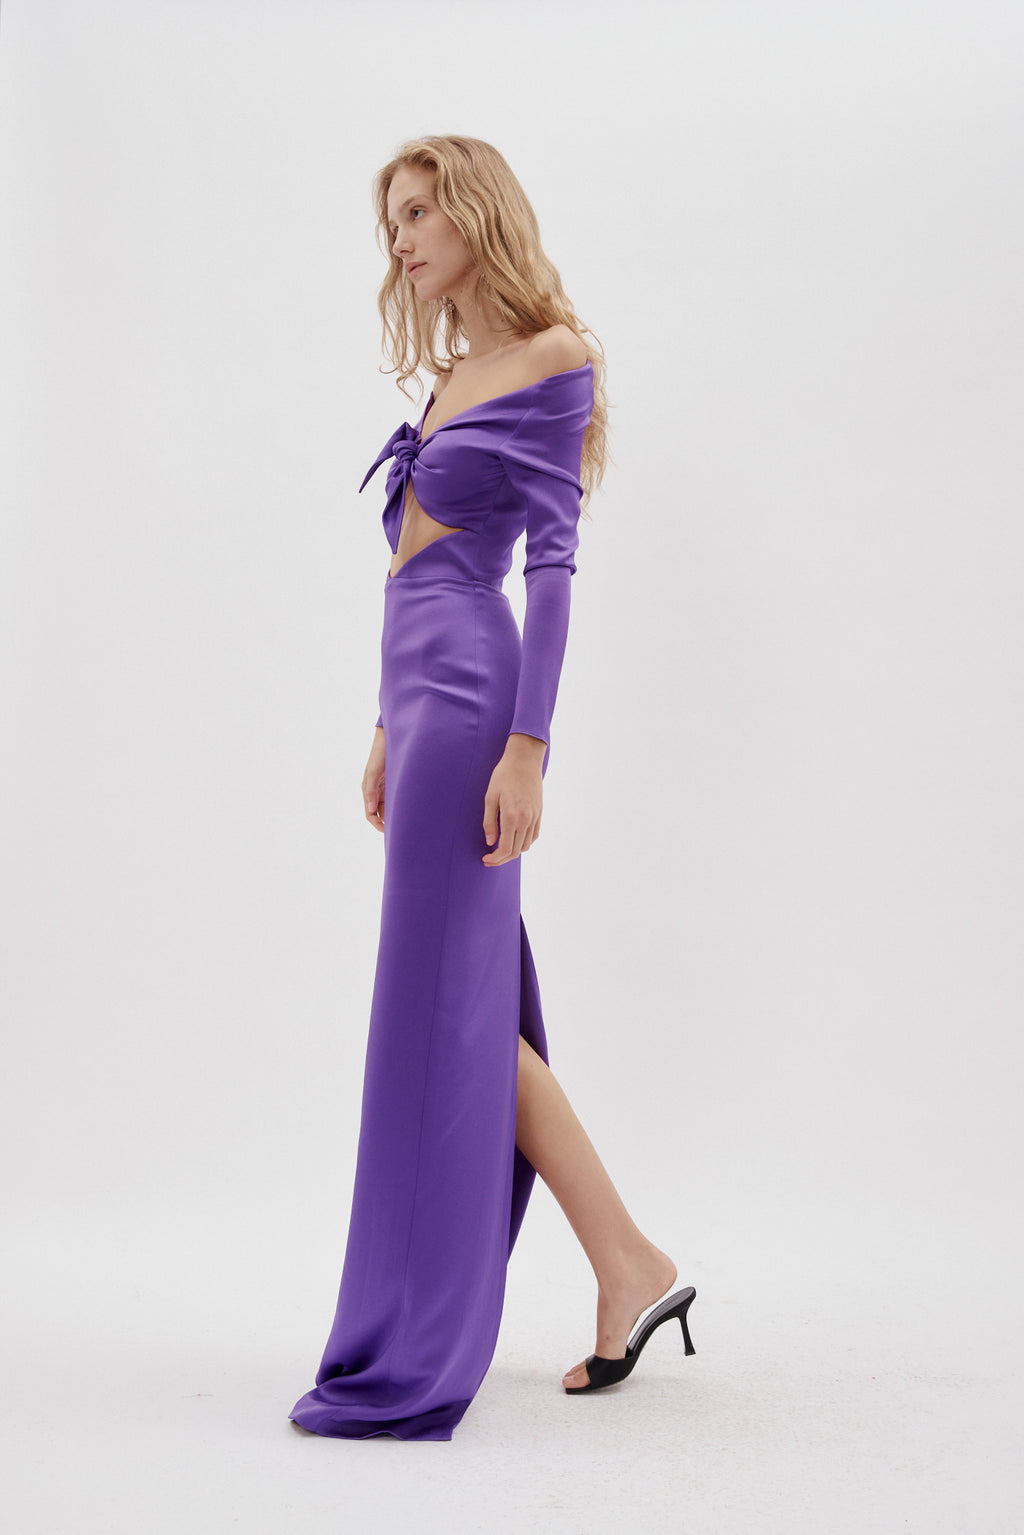 Lorne Purple Dress